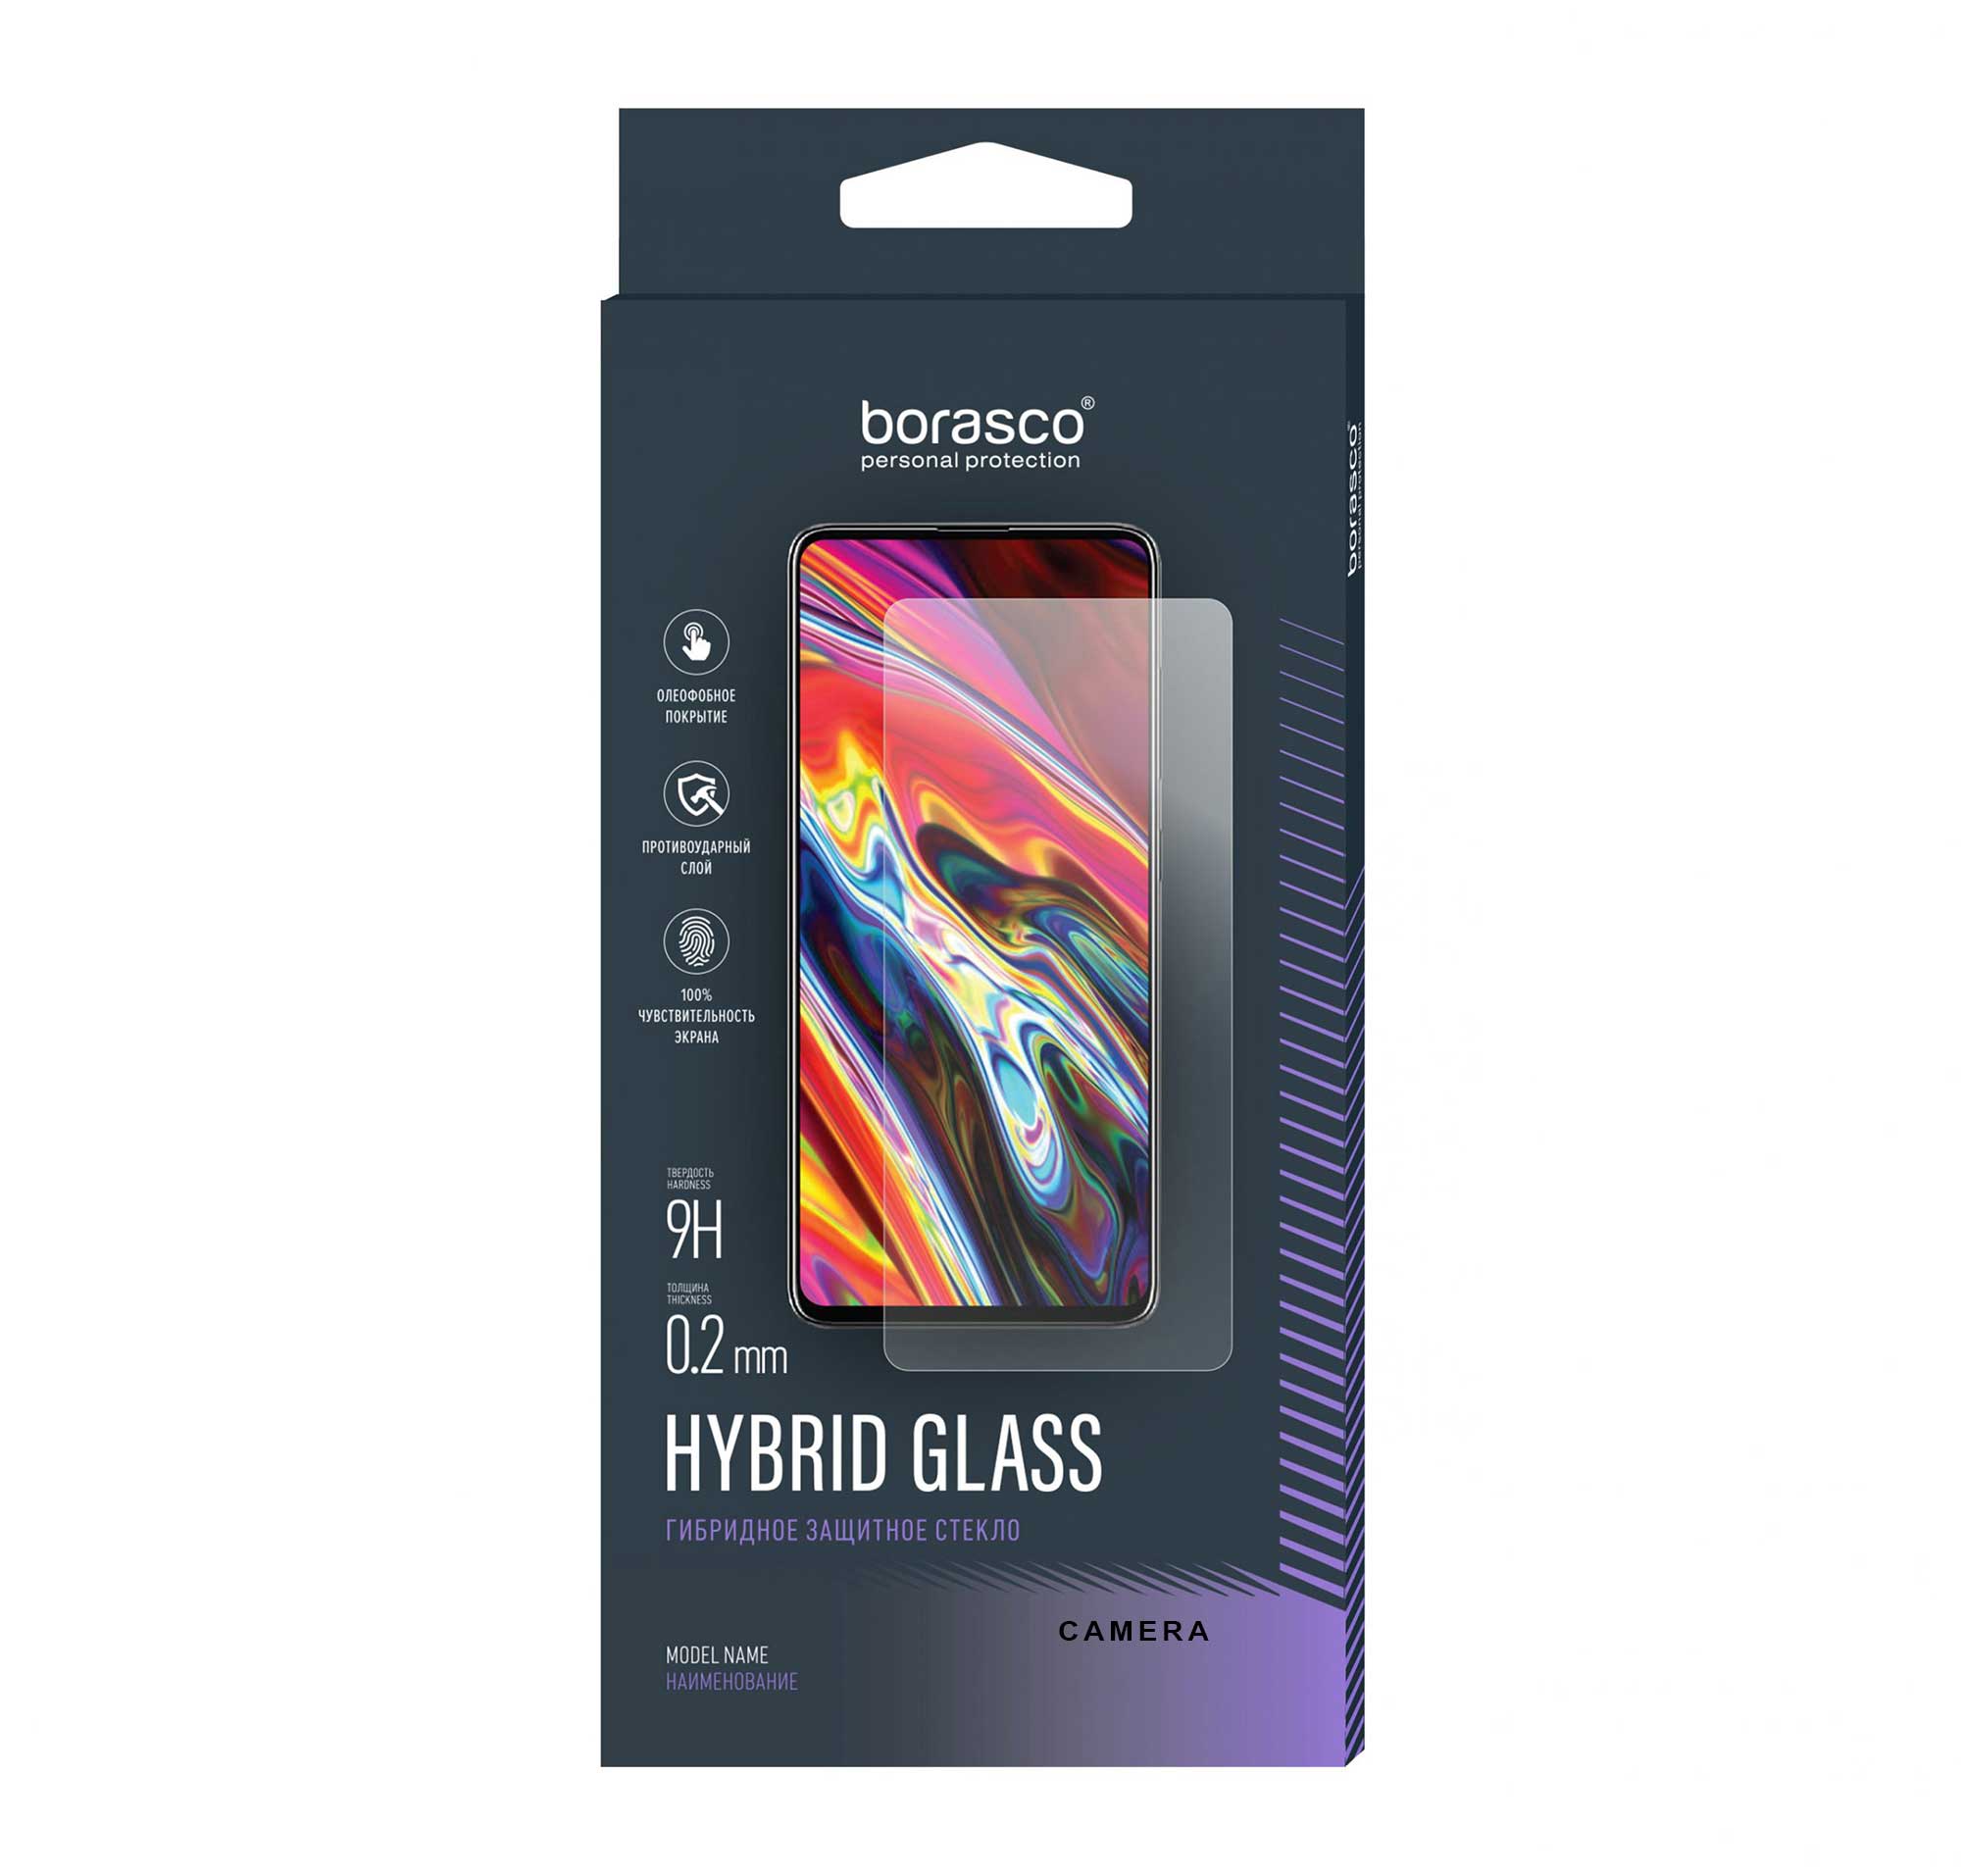 Защитное стекло (Экран+Камера) BoraSCO Hybrid Glass для OPPO A55 oppo a55 ащитный экран из нано стекла 9h одна штука